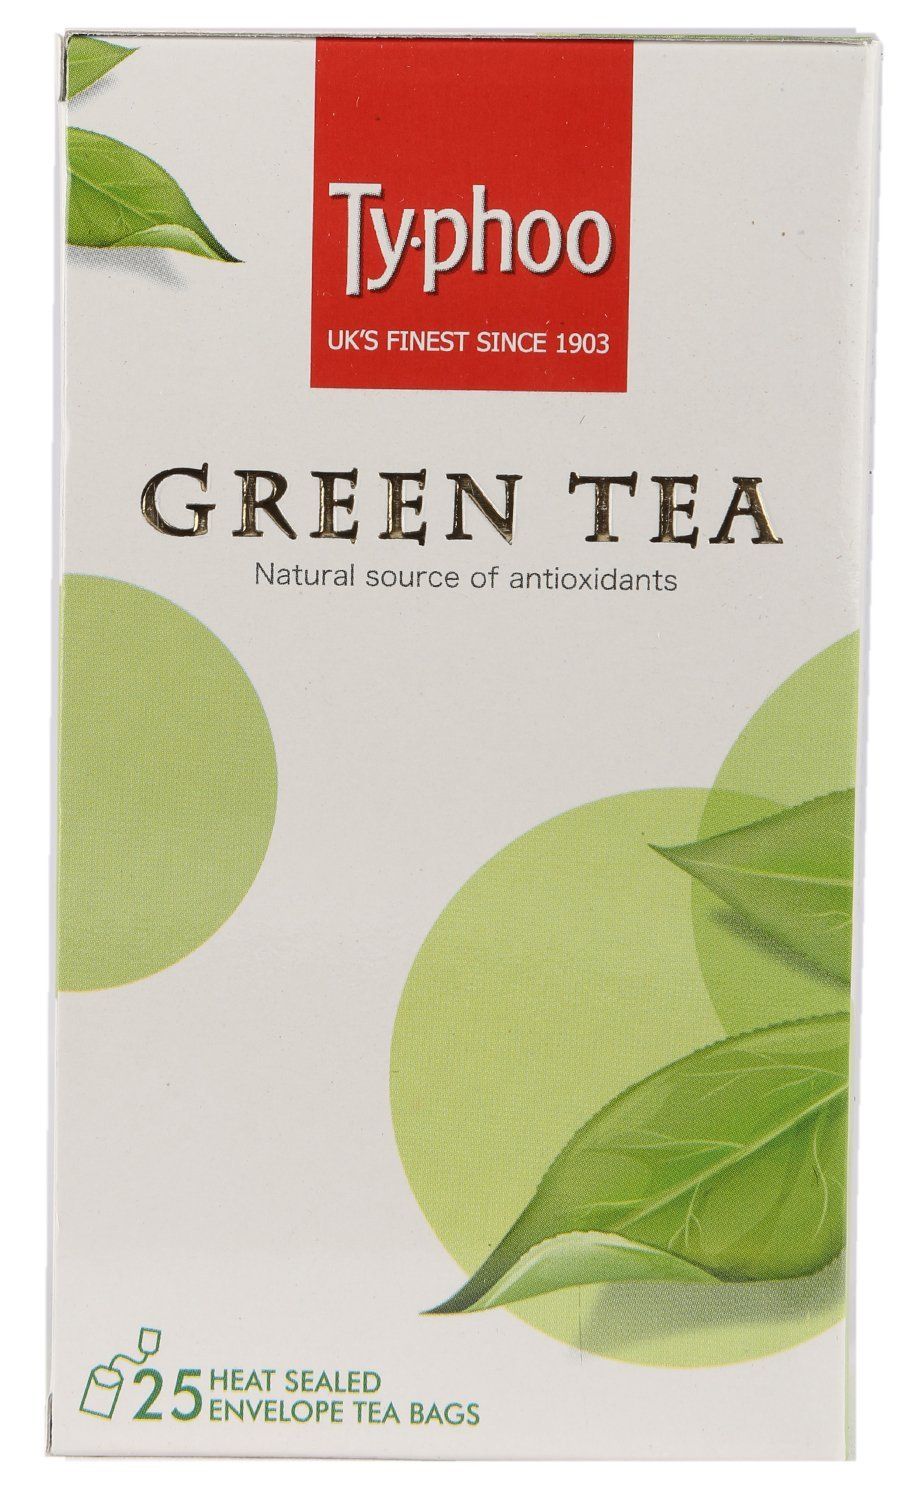 Typhoo Organic Green Tea Image